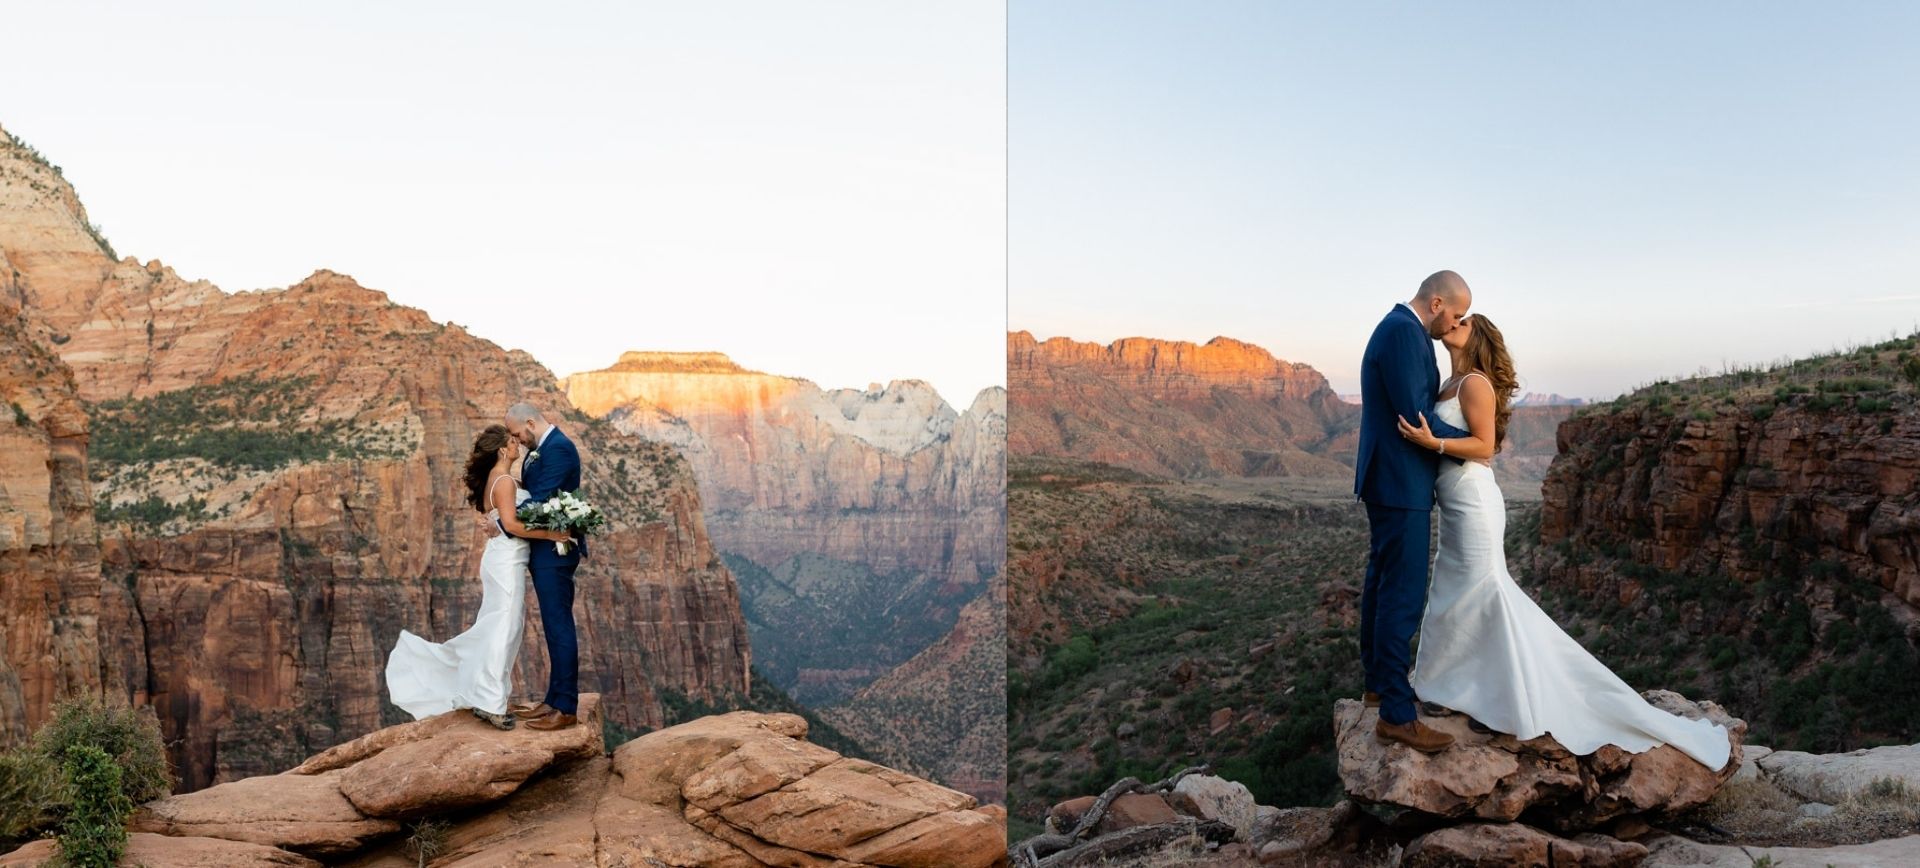 zion national park wedding in utah - bride & groom wedding pictures